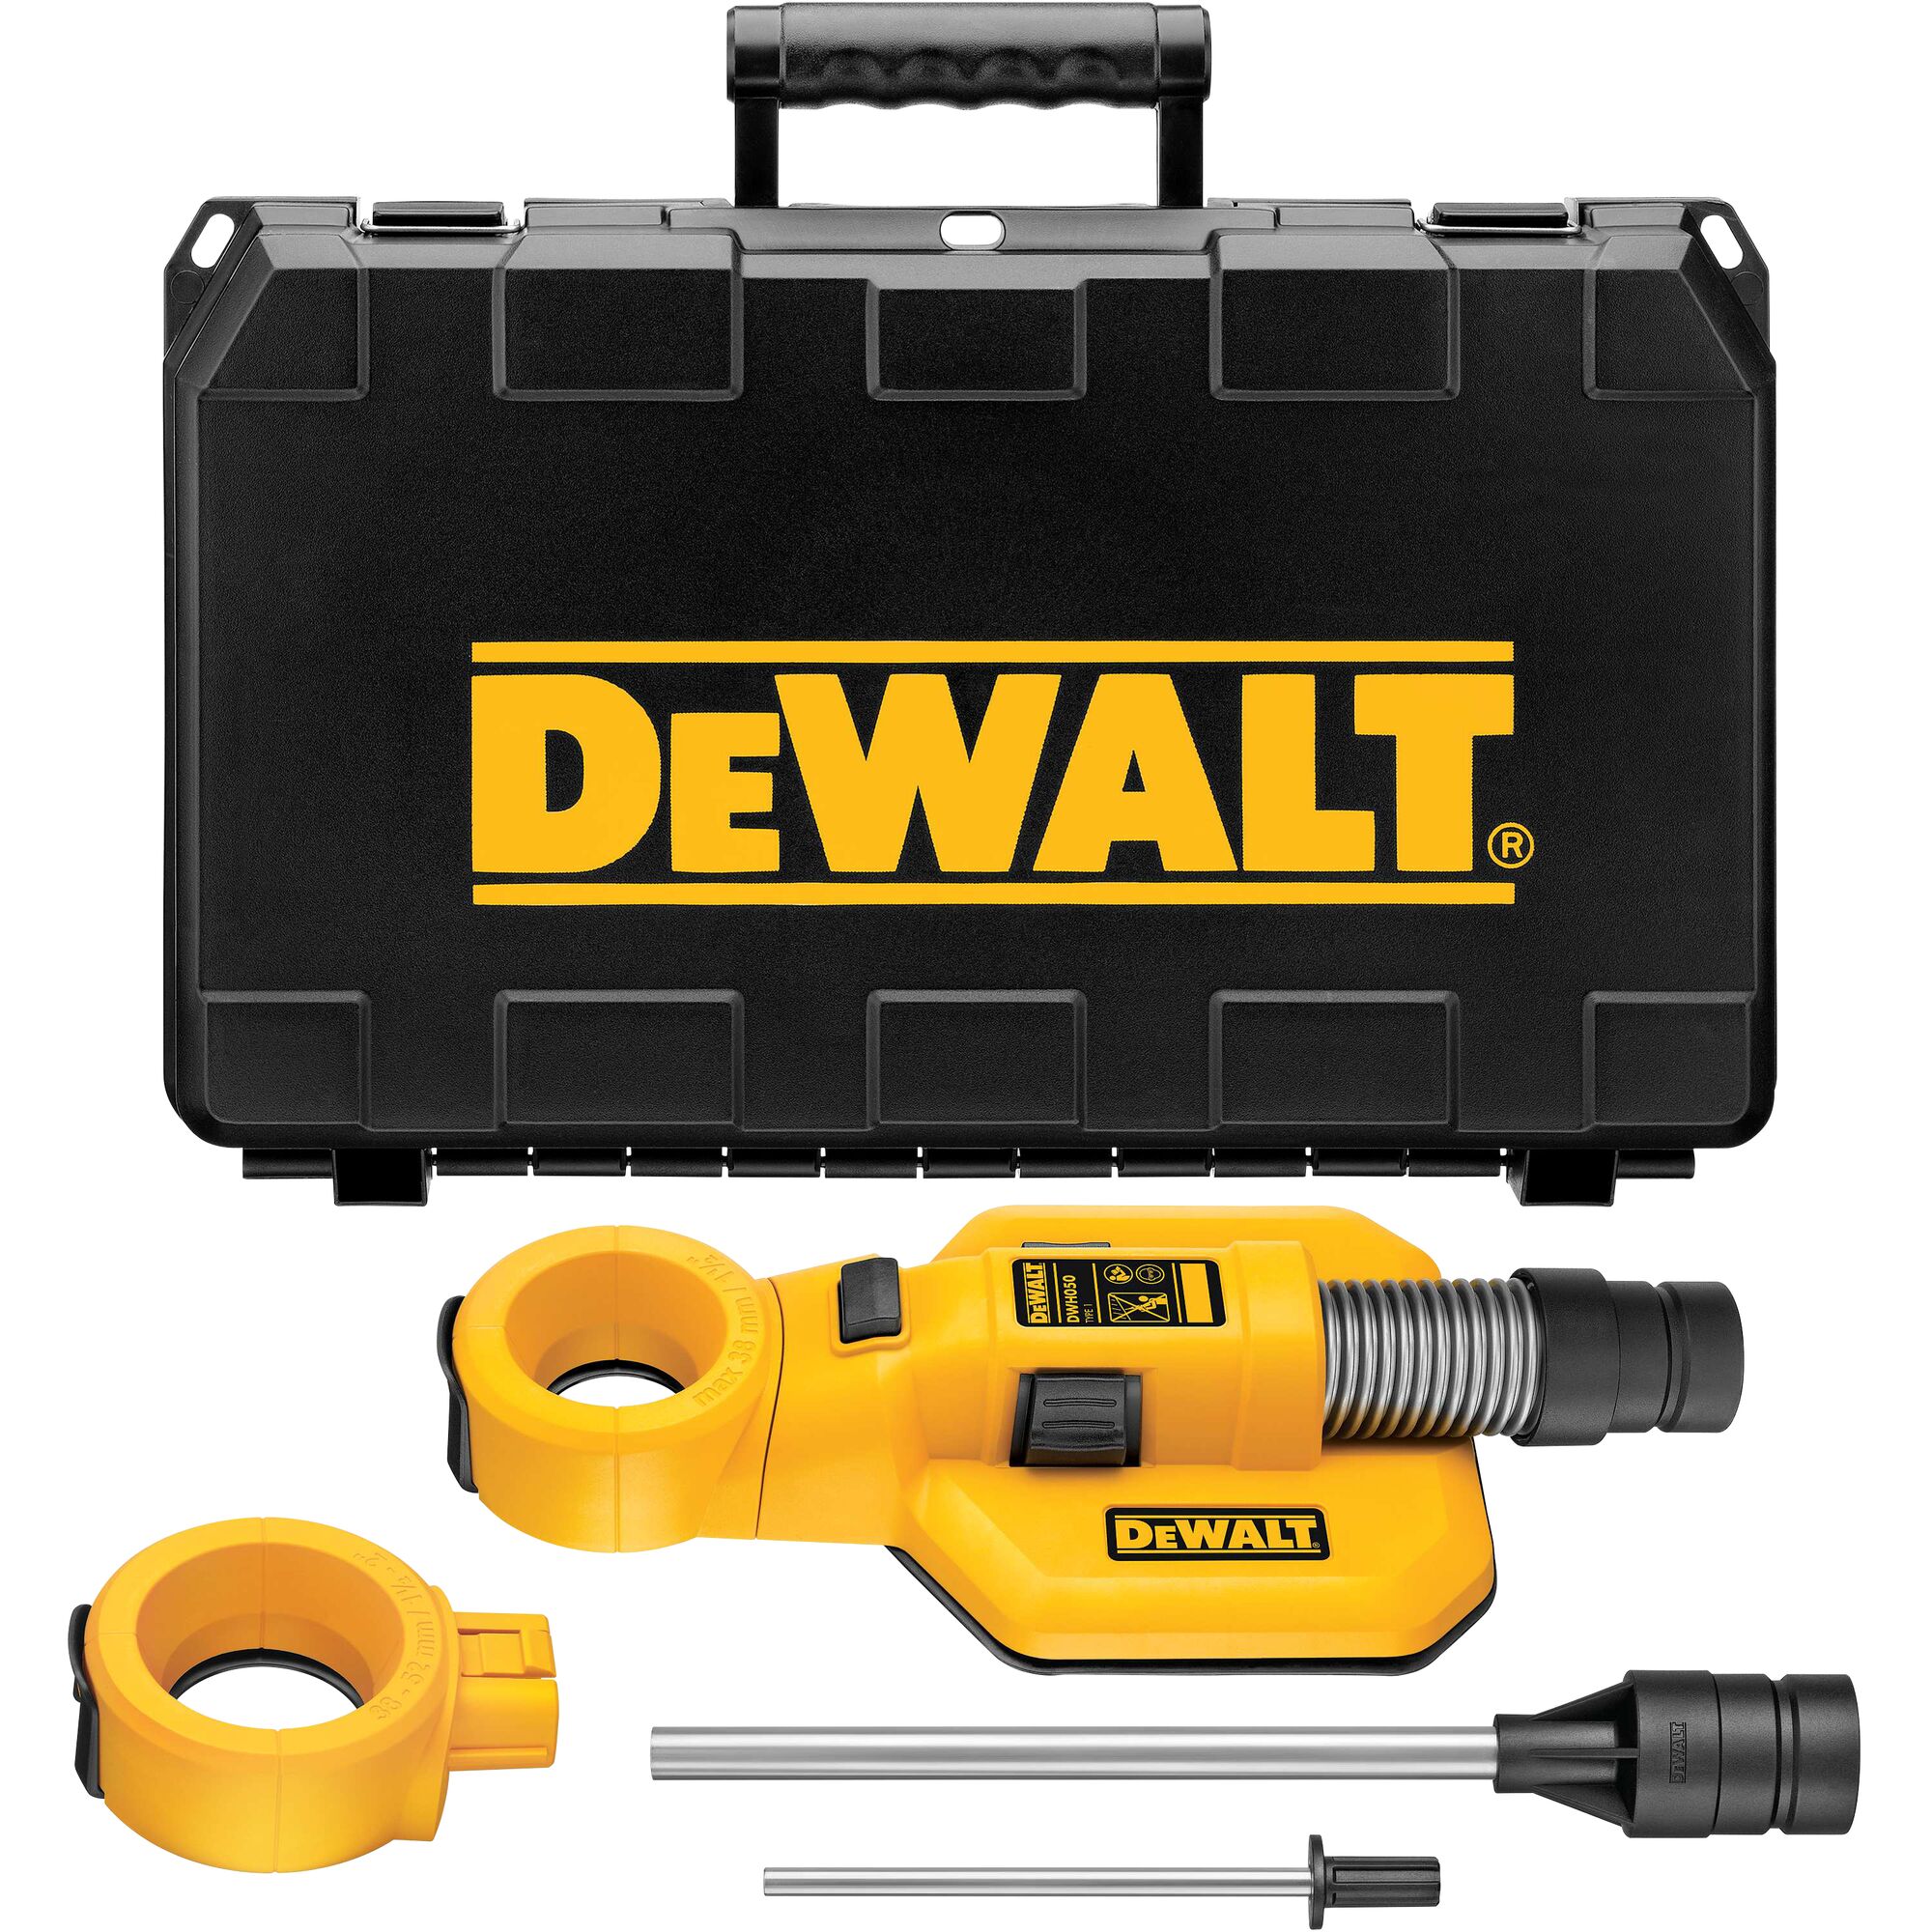 Dewalt #DWH050K Dewalt Large Hammer Drill Dust Extraction/Collection System 